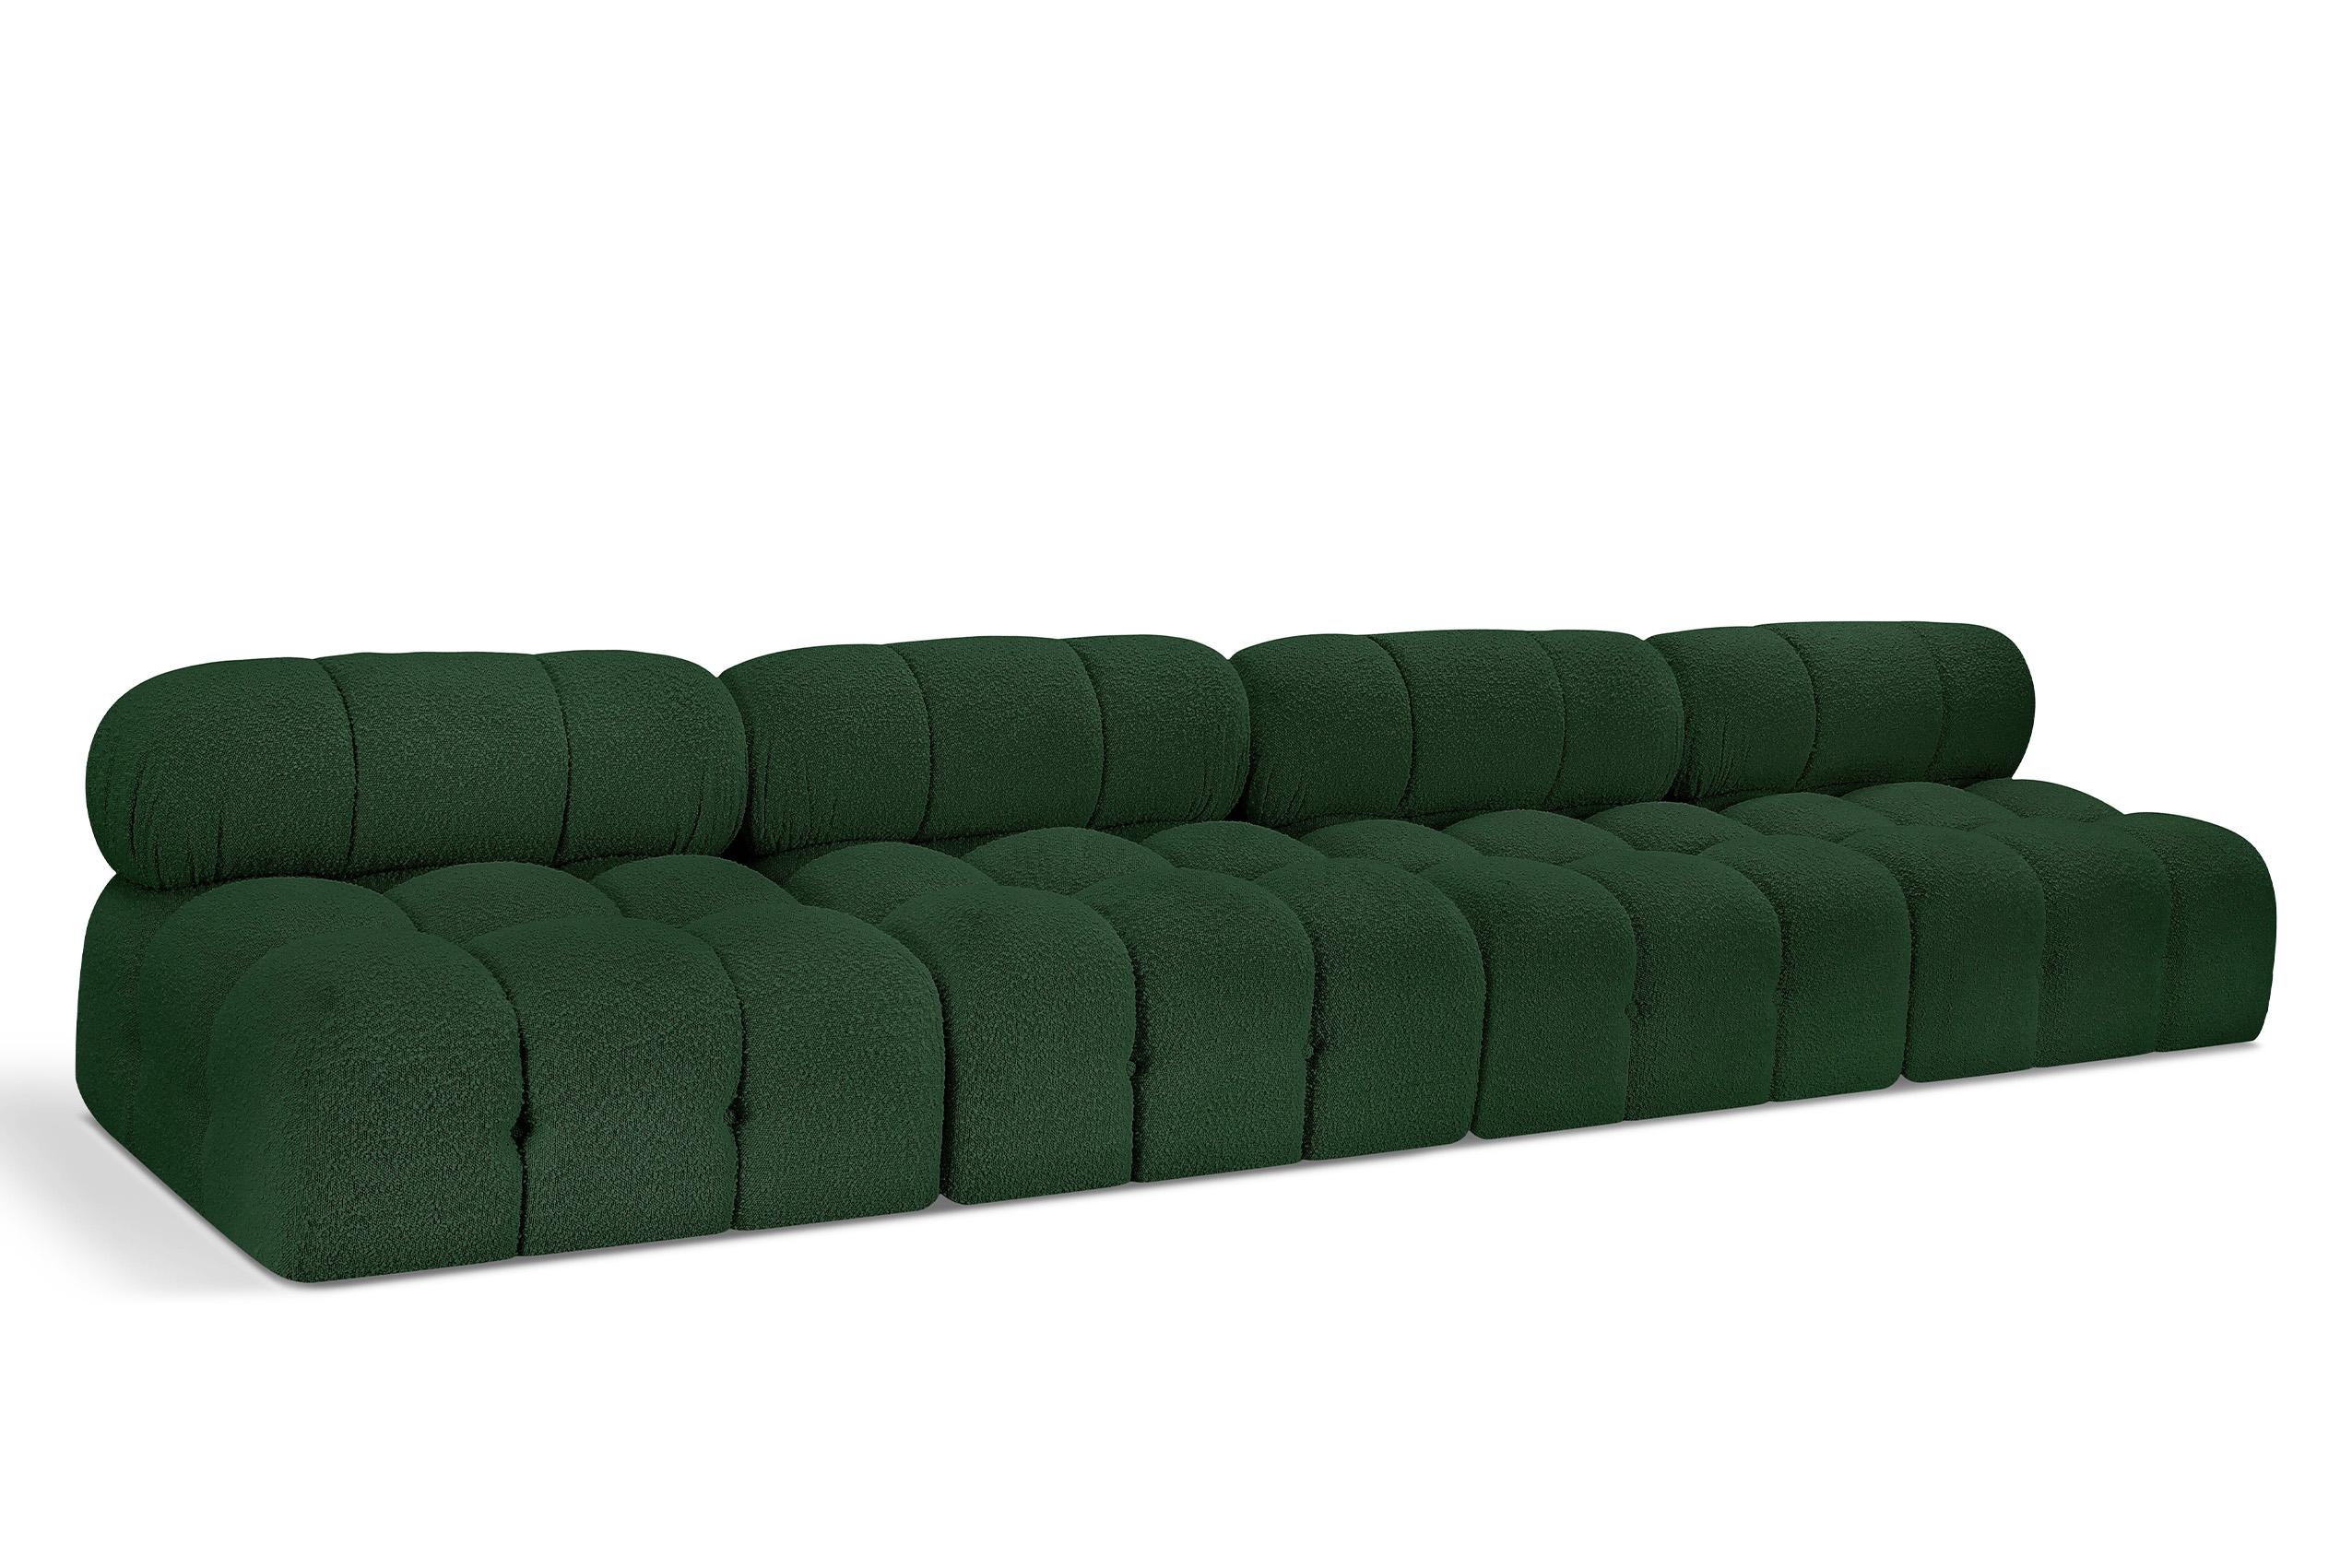 Contemporary, Modern Modular Sofa AMES 611Green-S136B 611Green-S136B in Green 